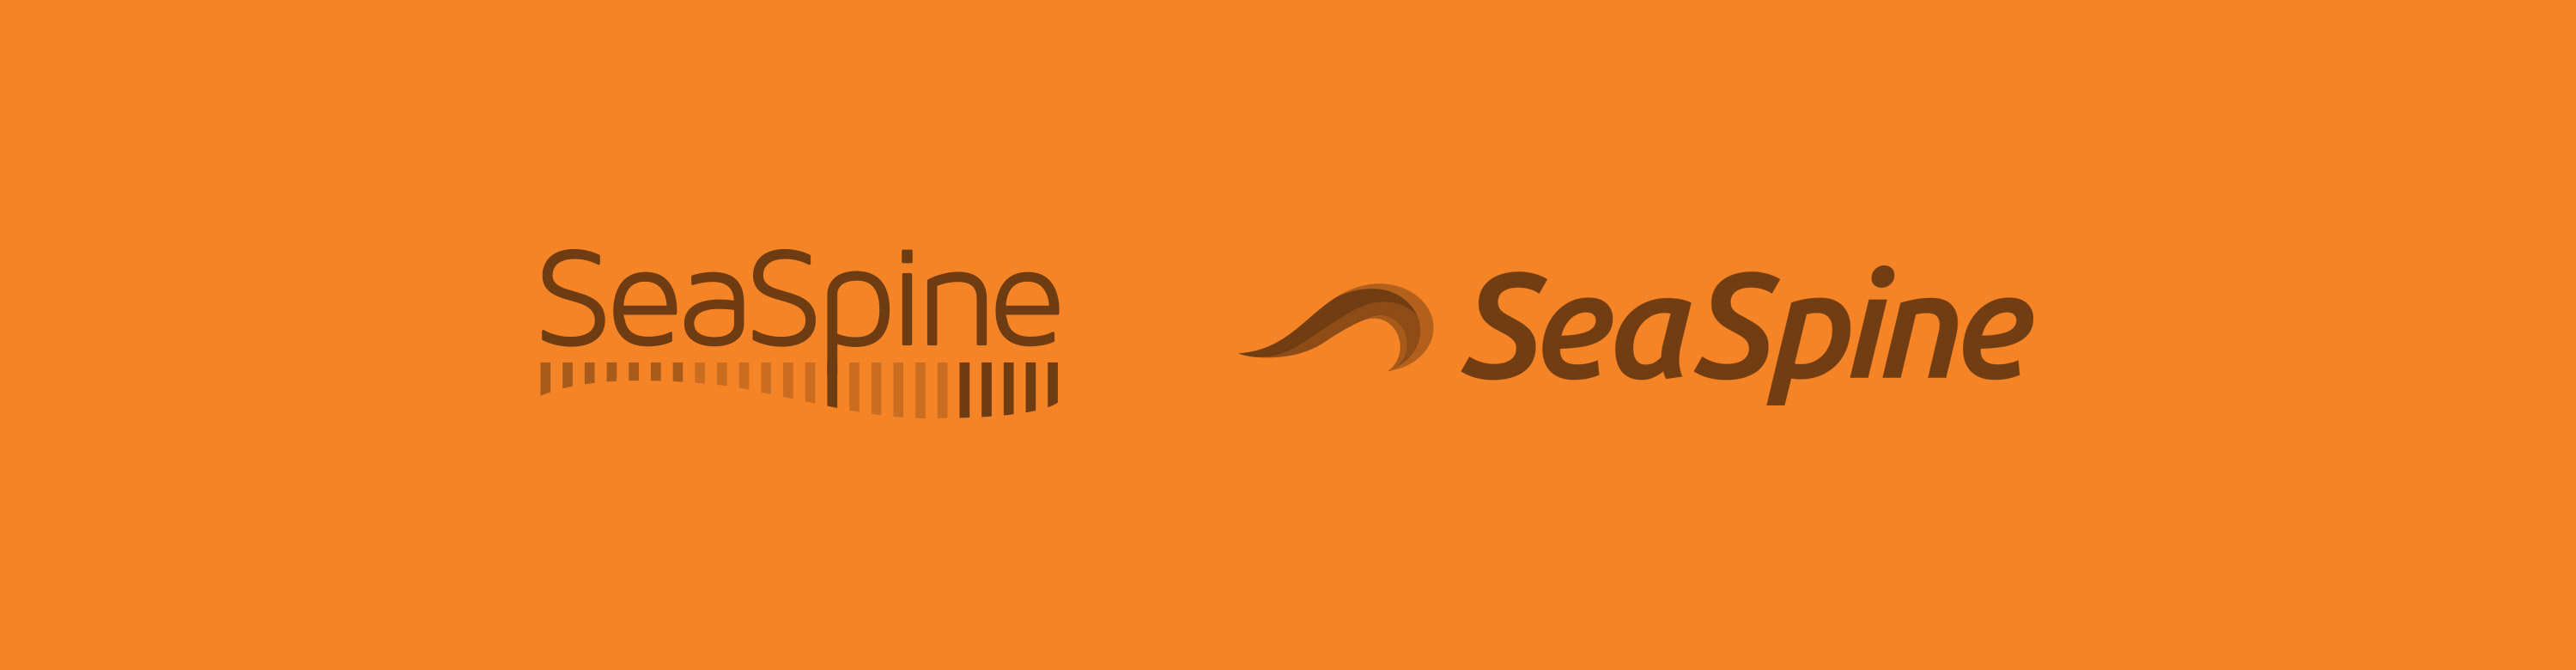 seaspine logo concepts